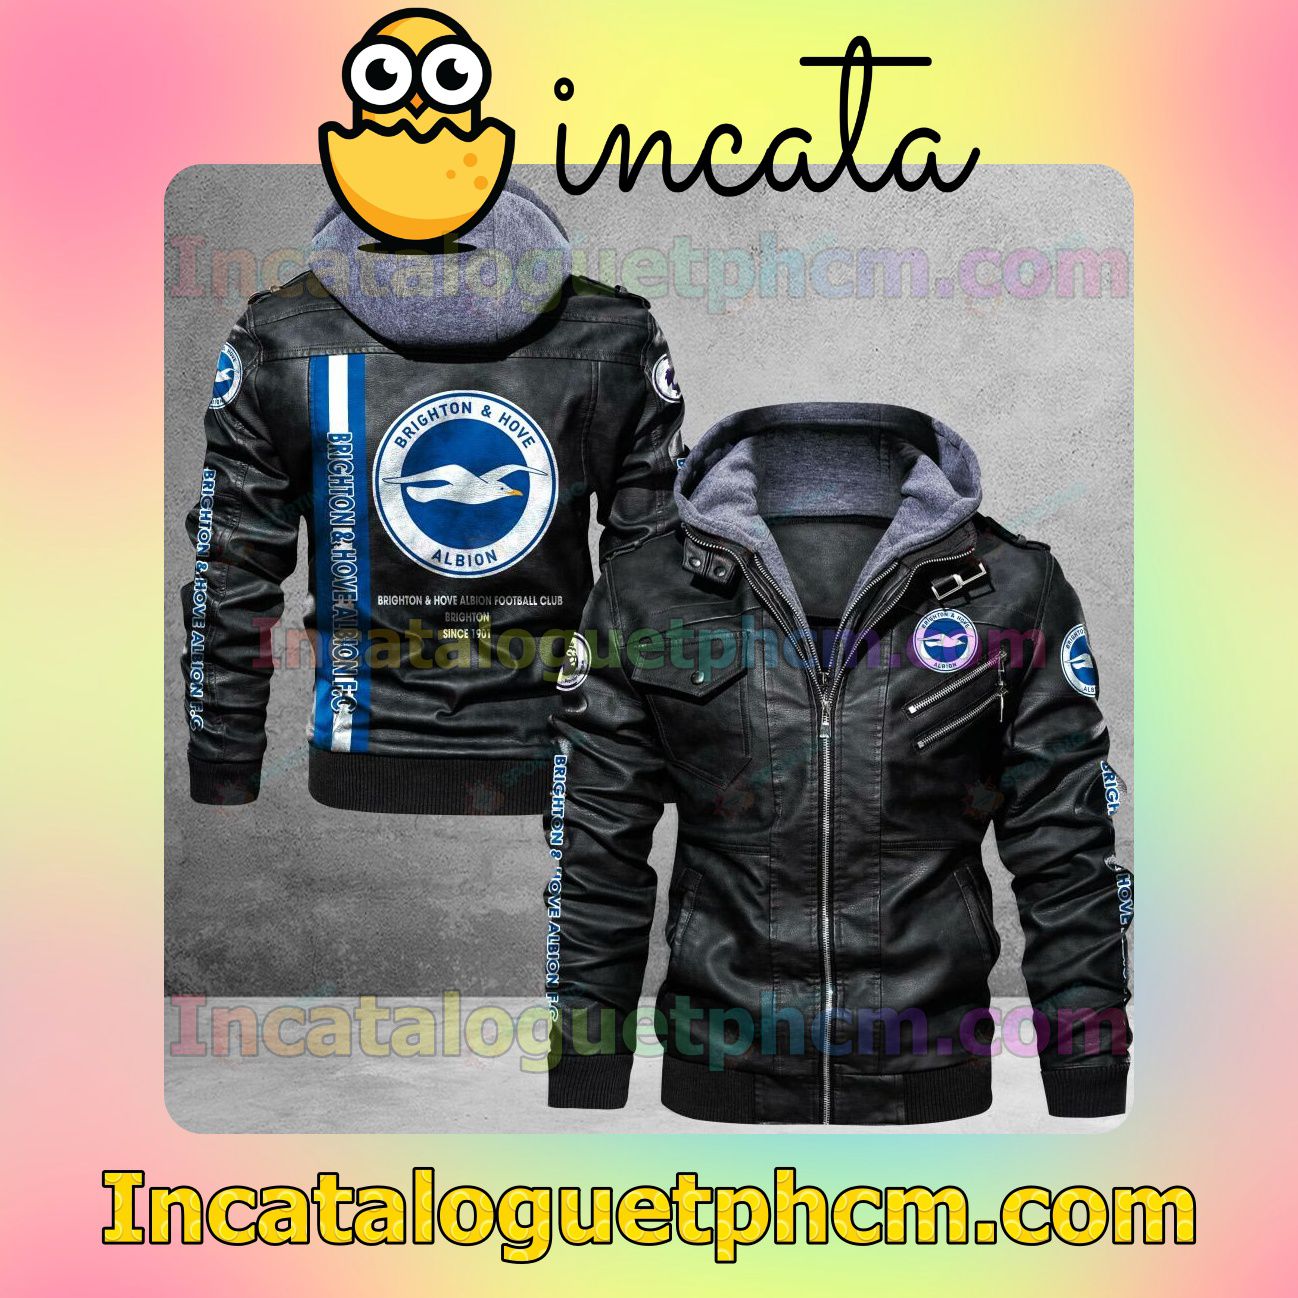 Brighton & Hove Albion F.C Brand Uniform Leather Jacket